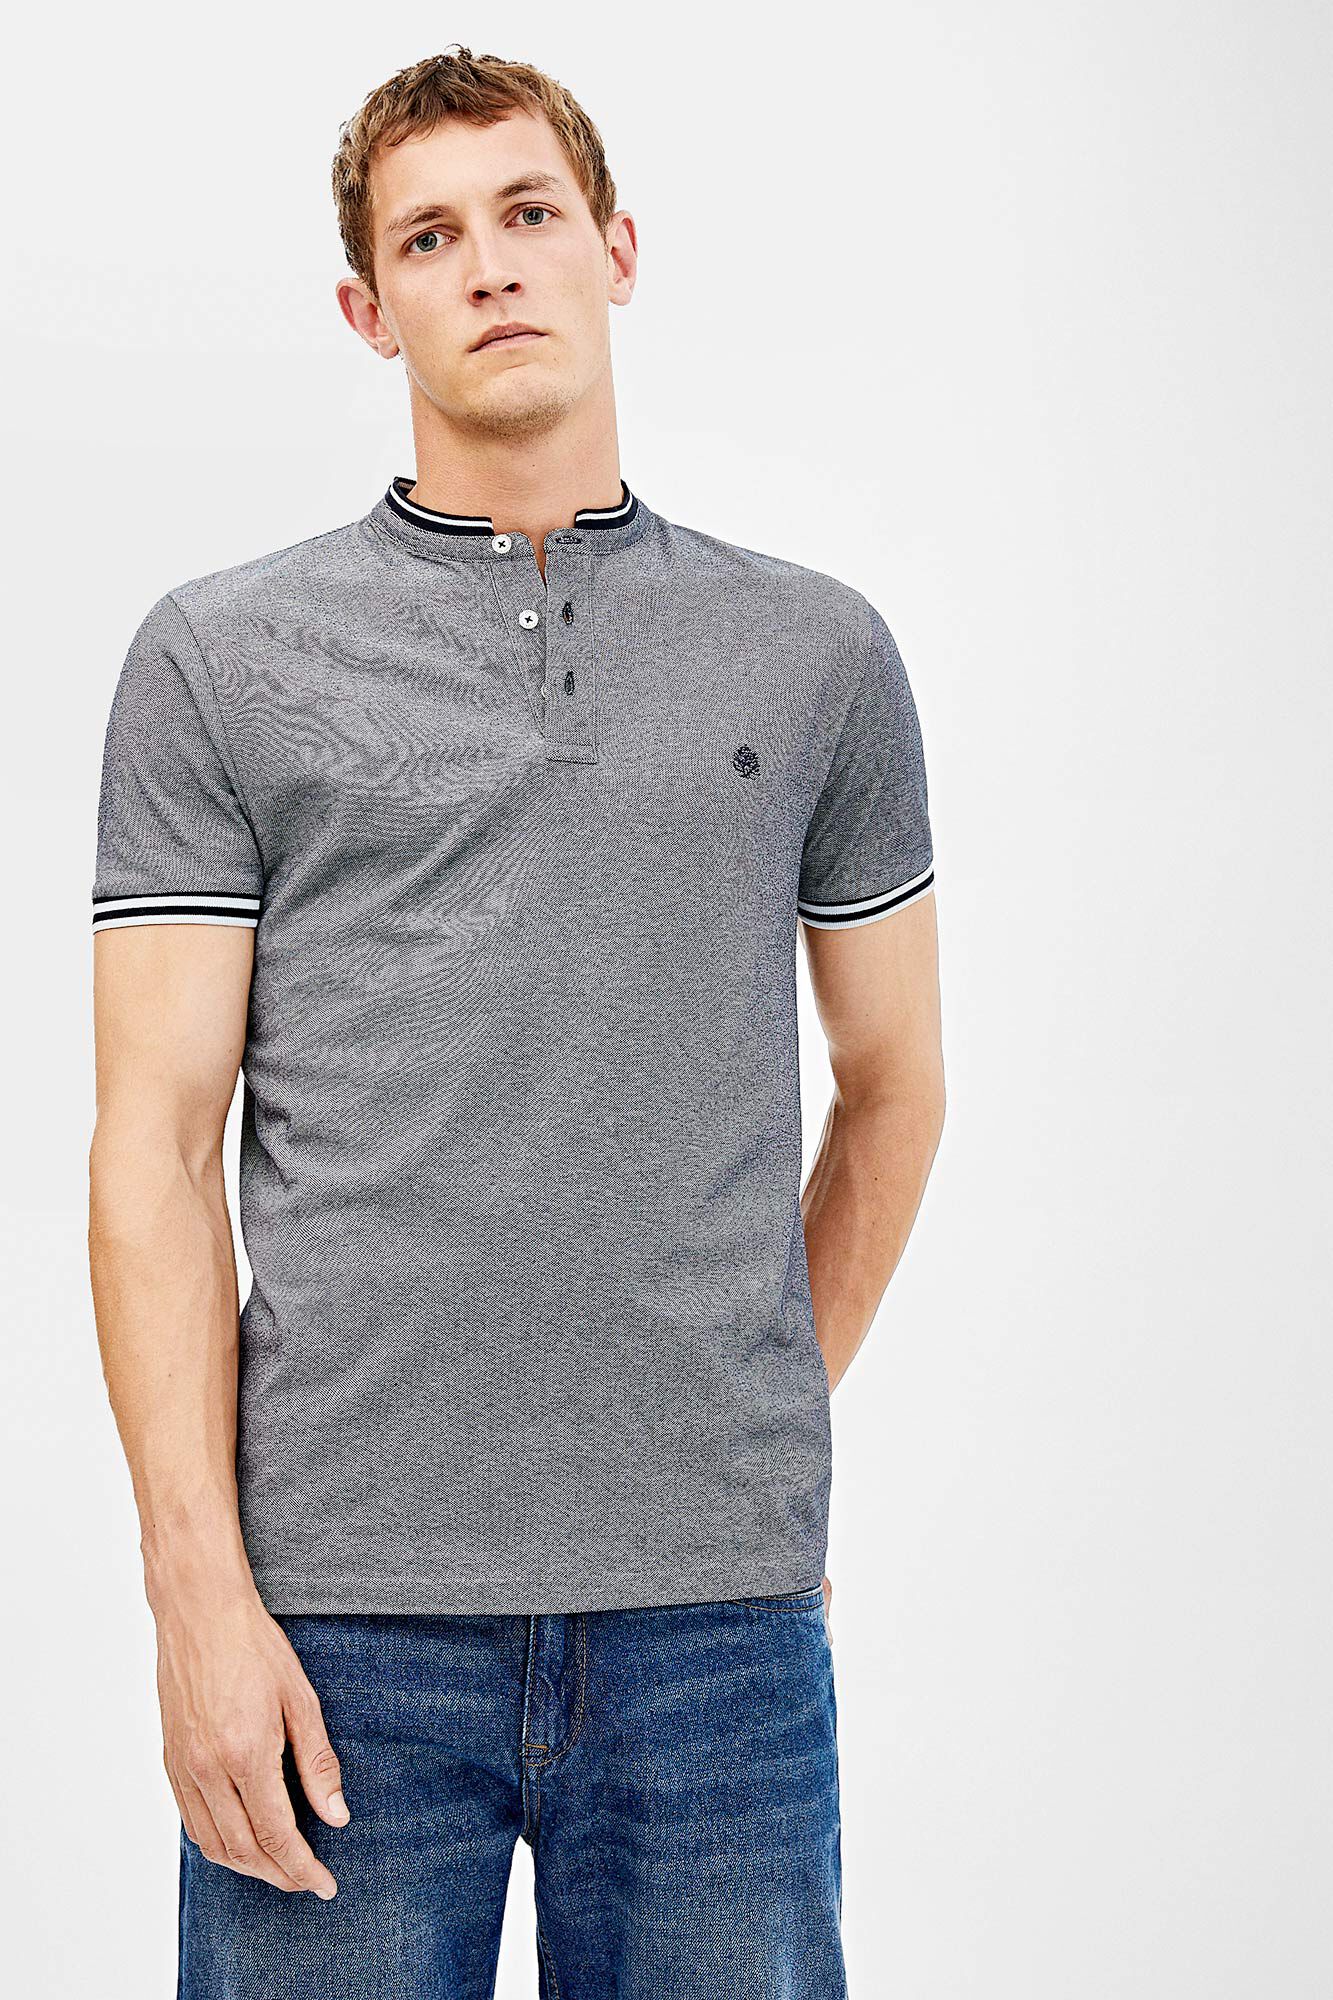 Polo T Shirt With Mandarin Collar Shop, 60% OFF | www 